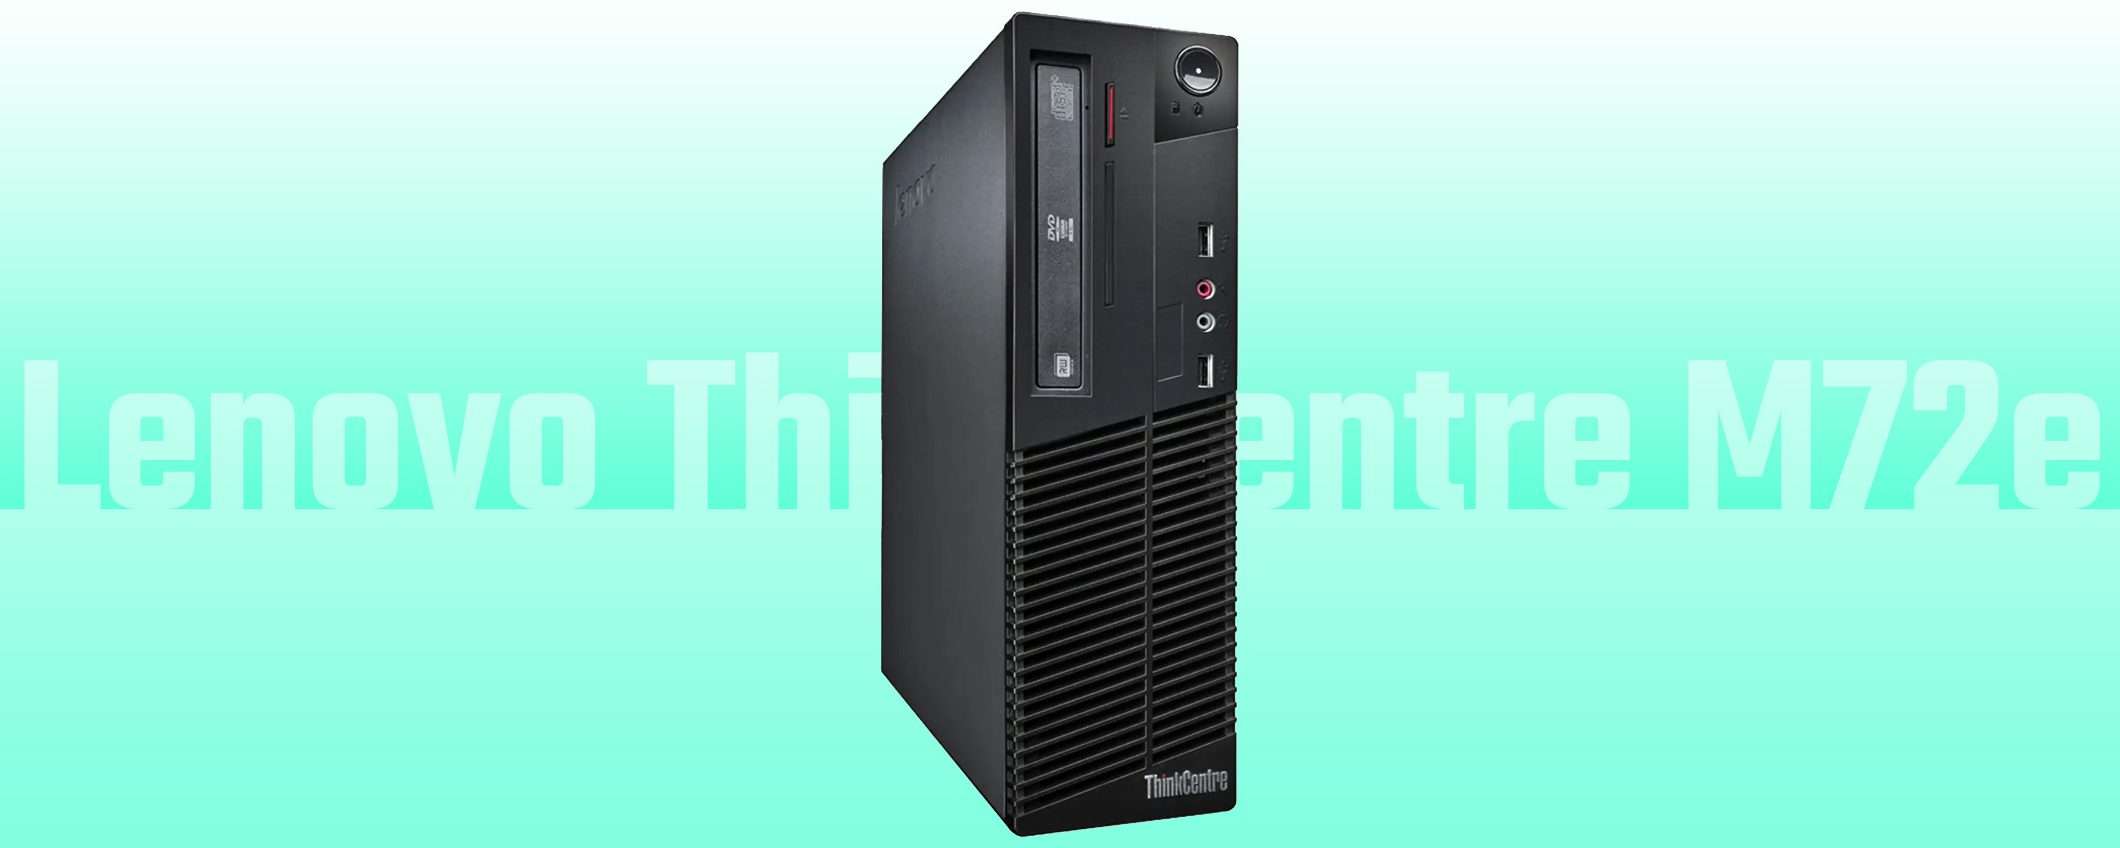 Lenovo ThinkCentre M72e: PC desktop a 57,90 euro